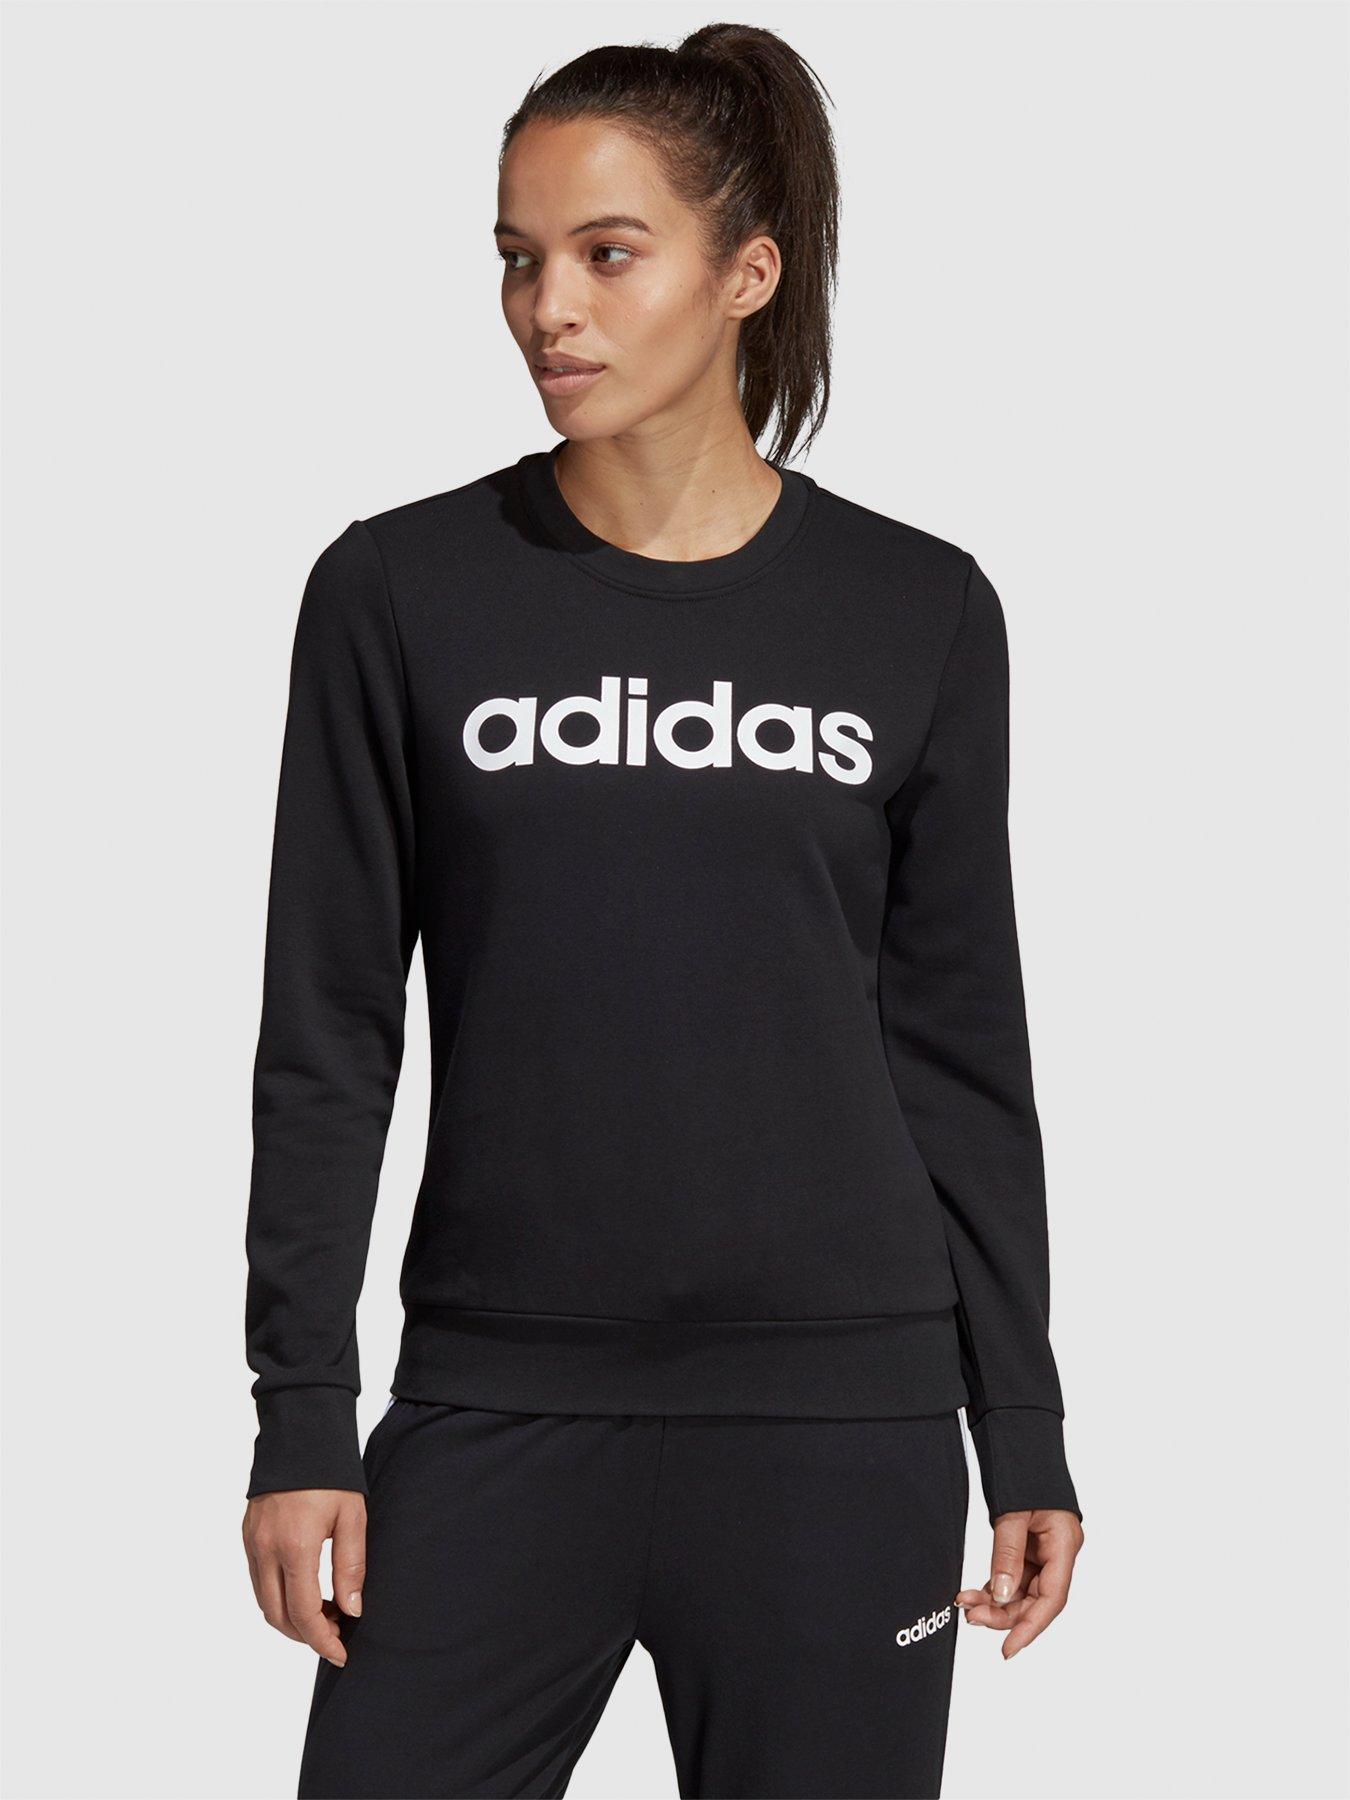 adidas linear crew sweatshirt